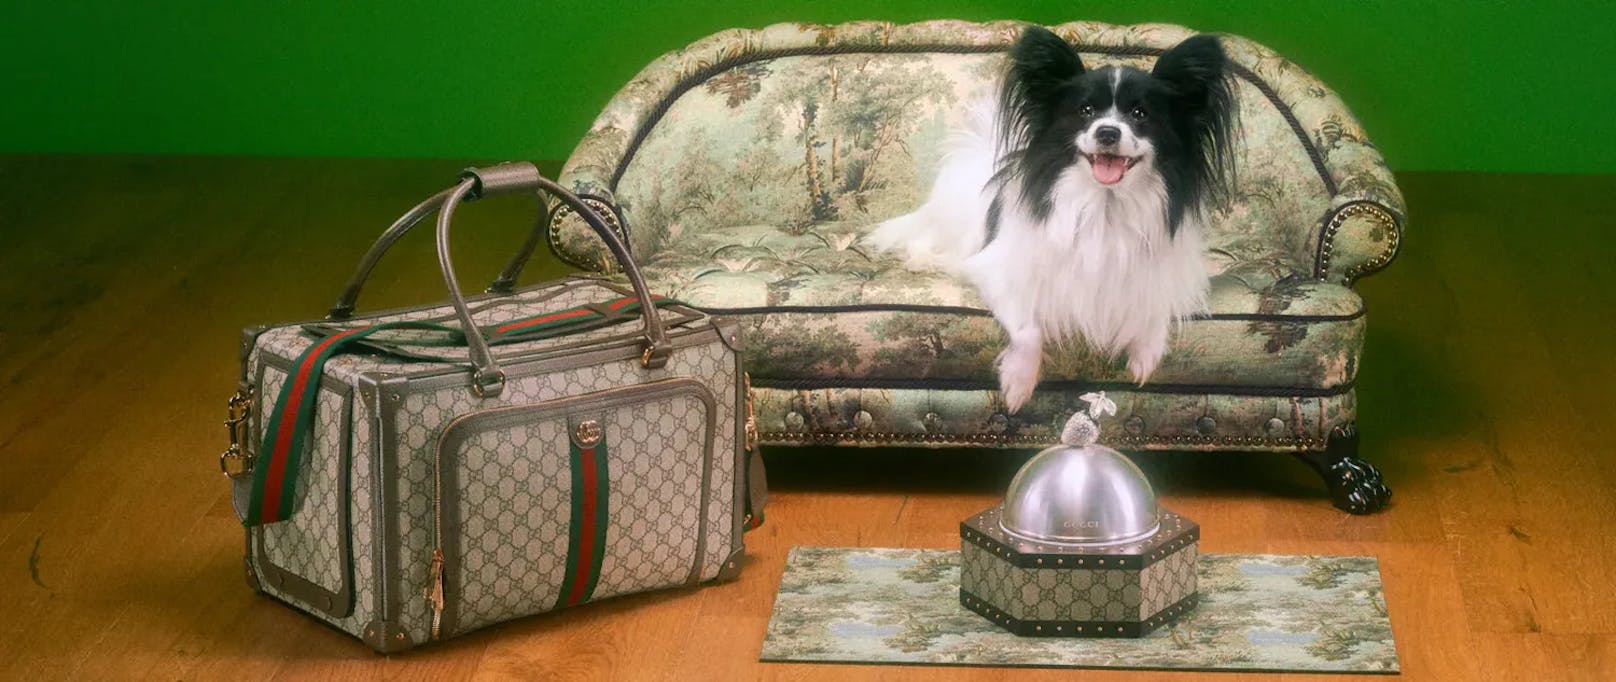 Mode für "kecke Diven": Gucci zieht Hund & Katz an